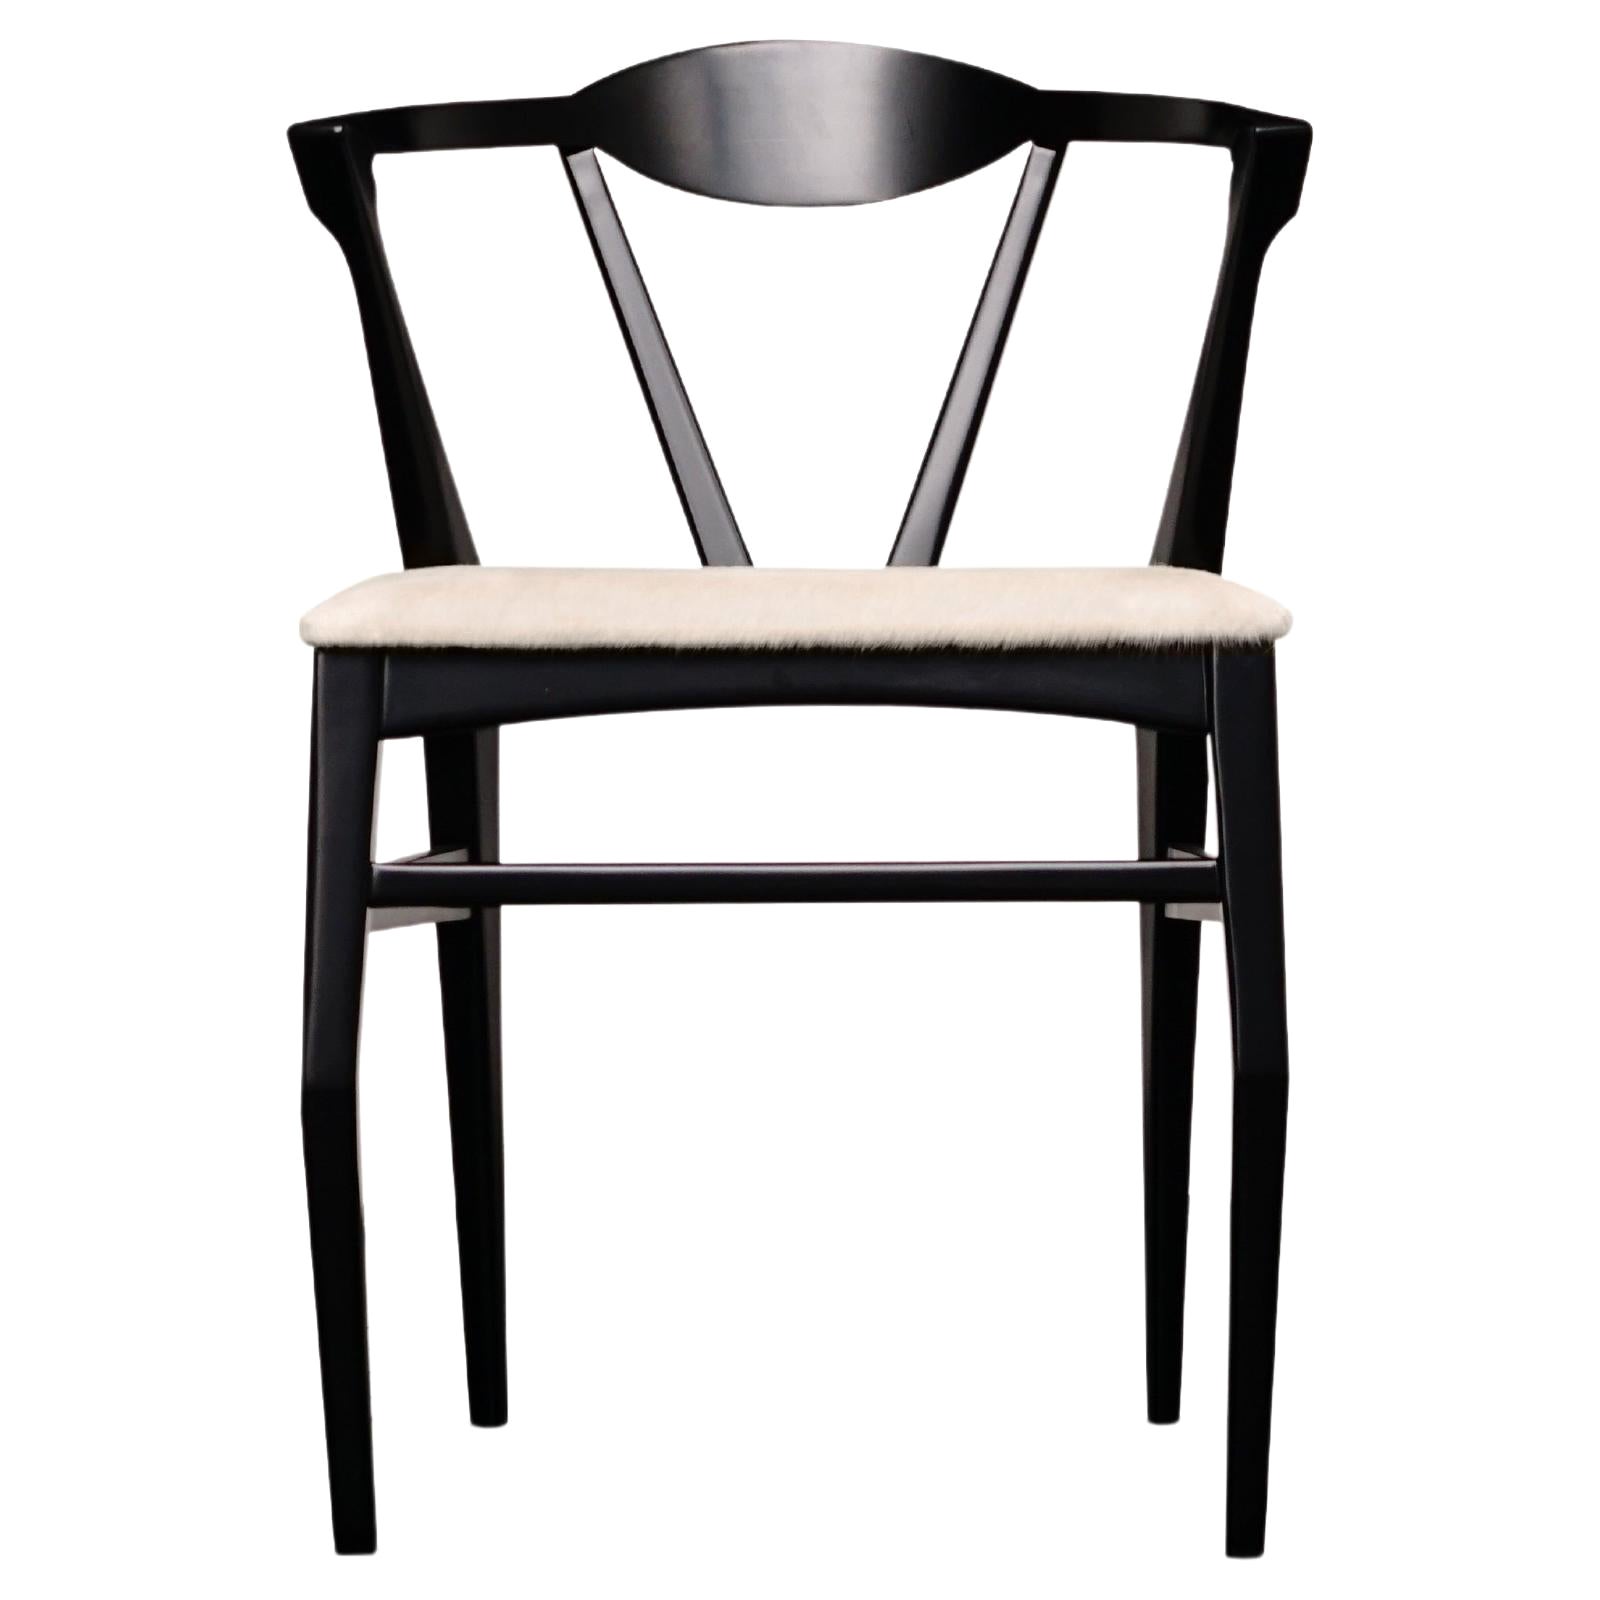 Arachnid Dining Chair by Atra Design